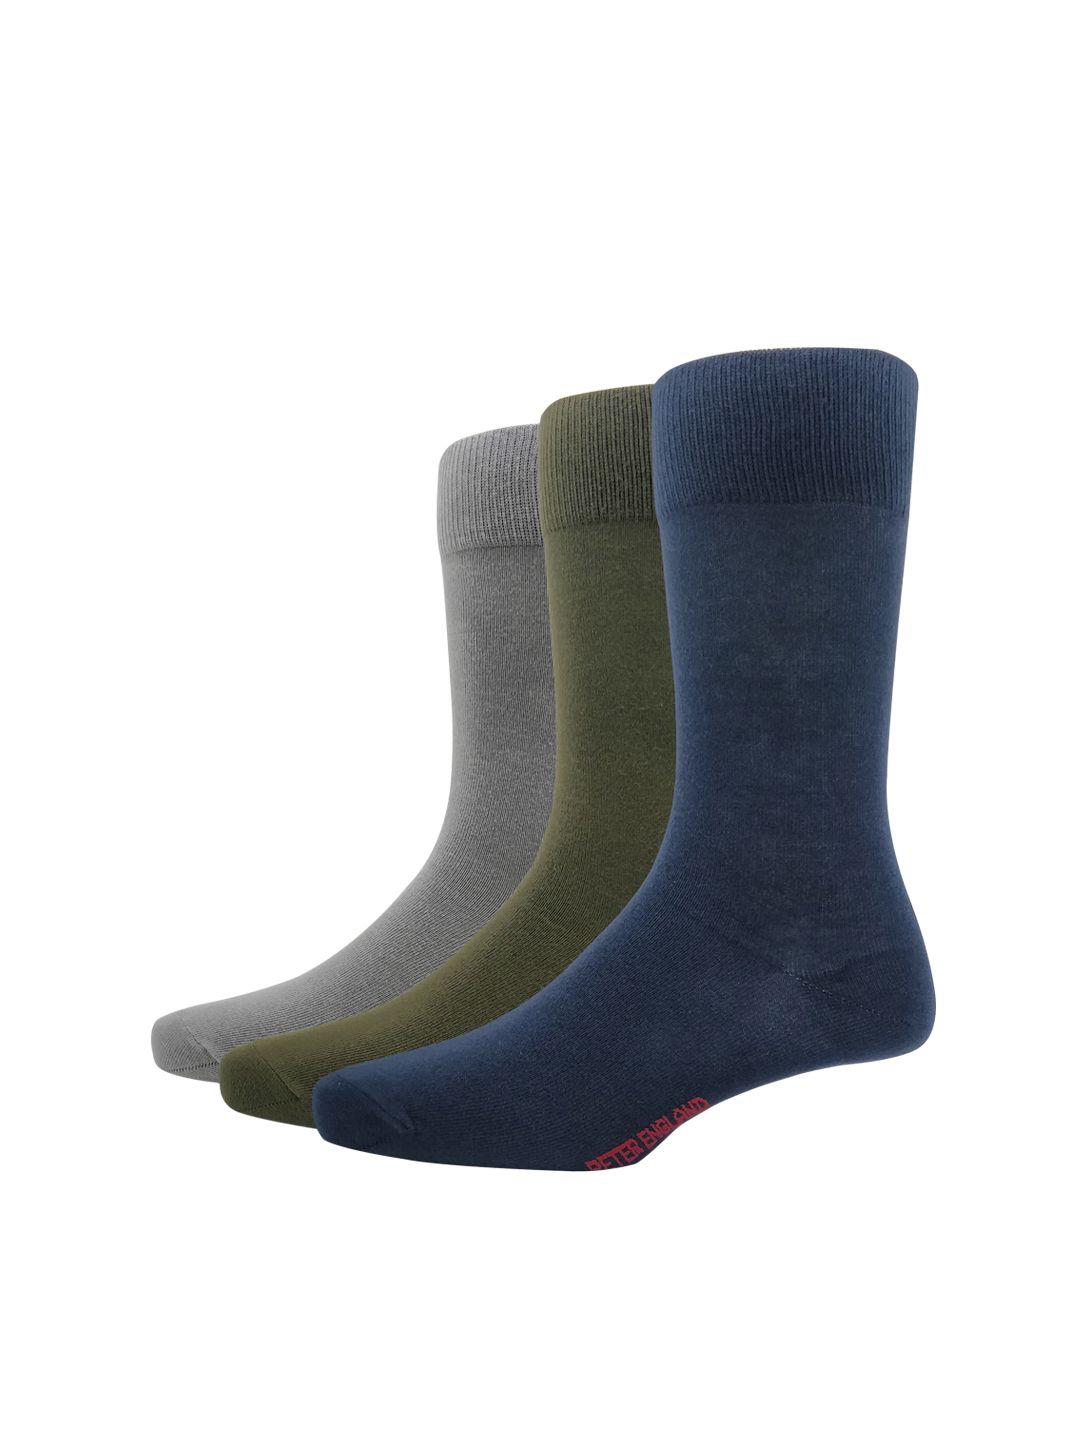 peter-england-men-set-of-3-calf-length-assorted-socks